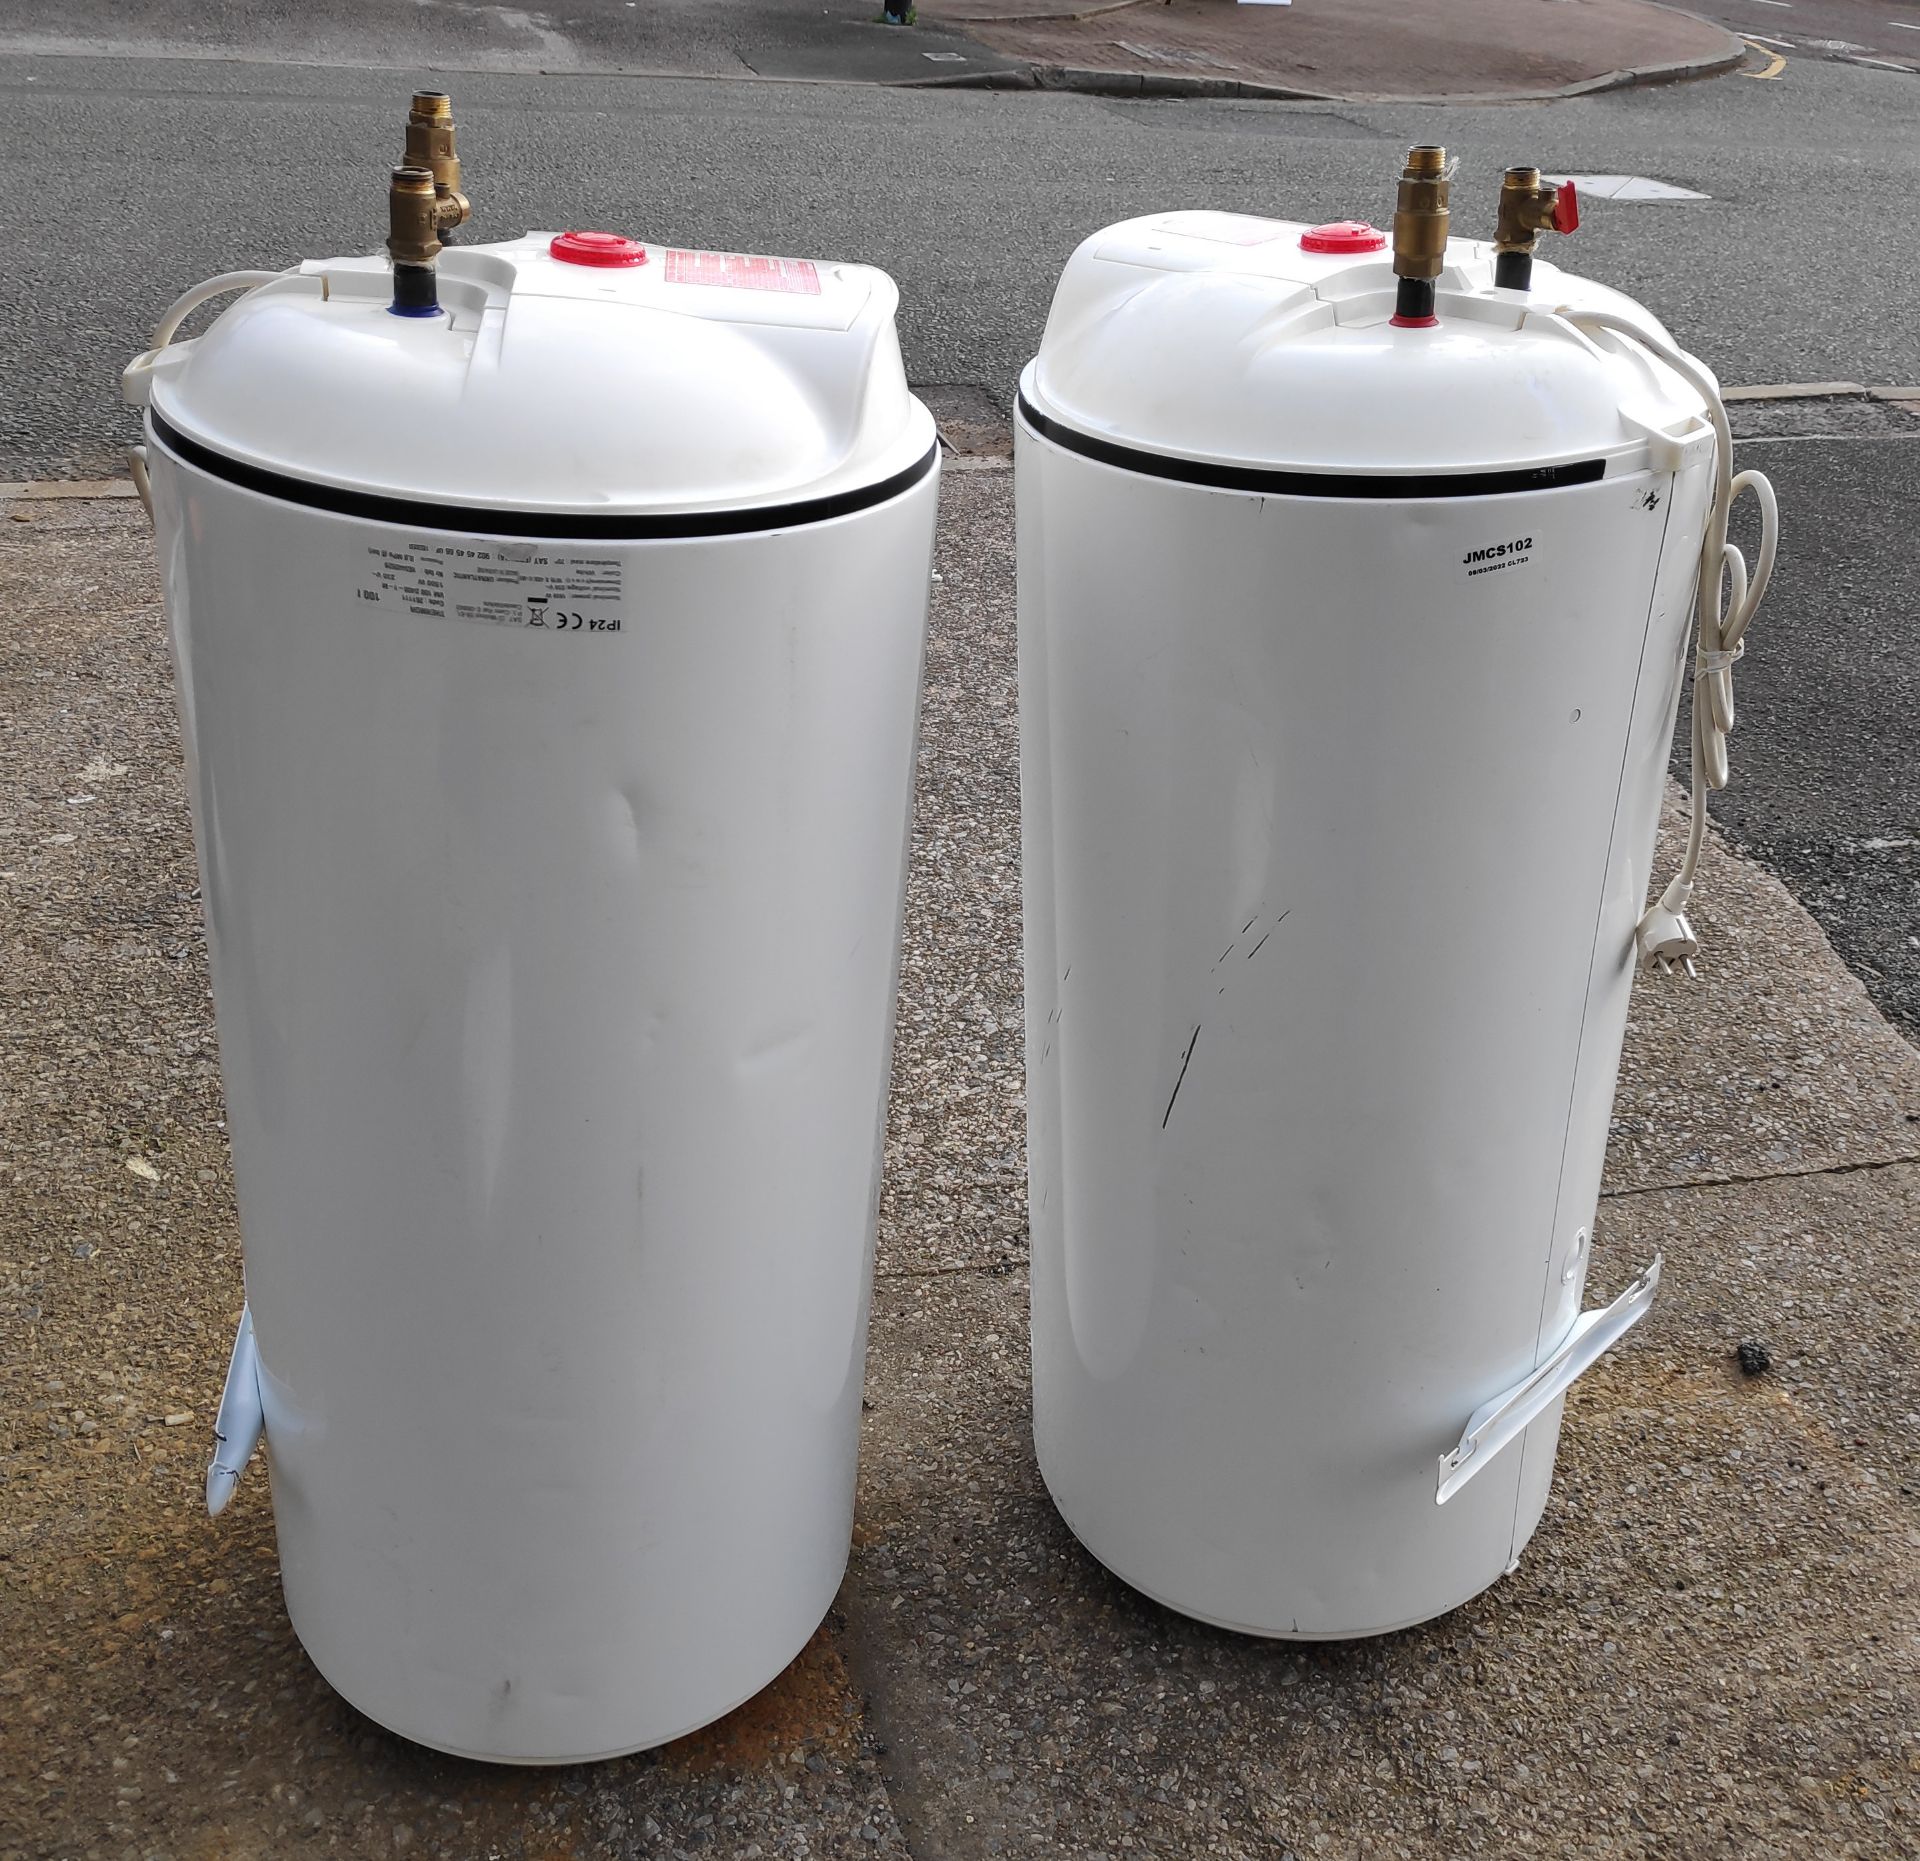 2 x Thermor 261111 100l 1500W Water Cylinders - 1015mm (h) x 433mm (w) x 451mm (d) - JMCS102 - - Image 2 of 10